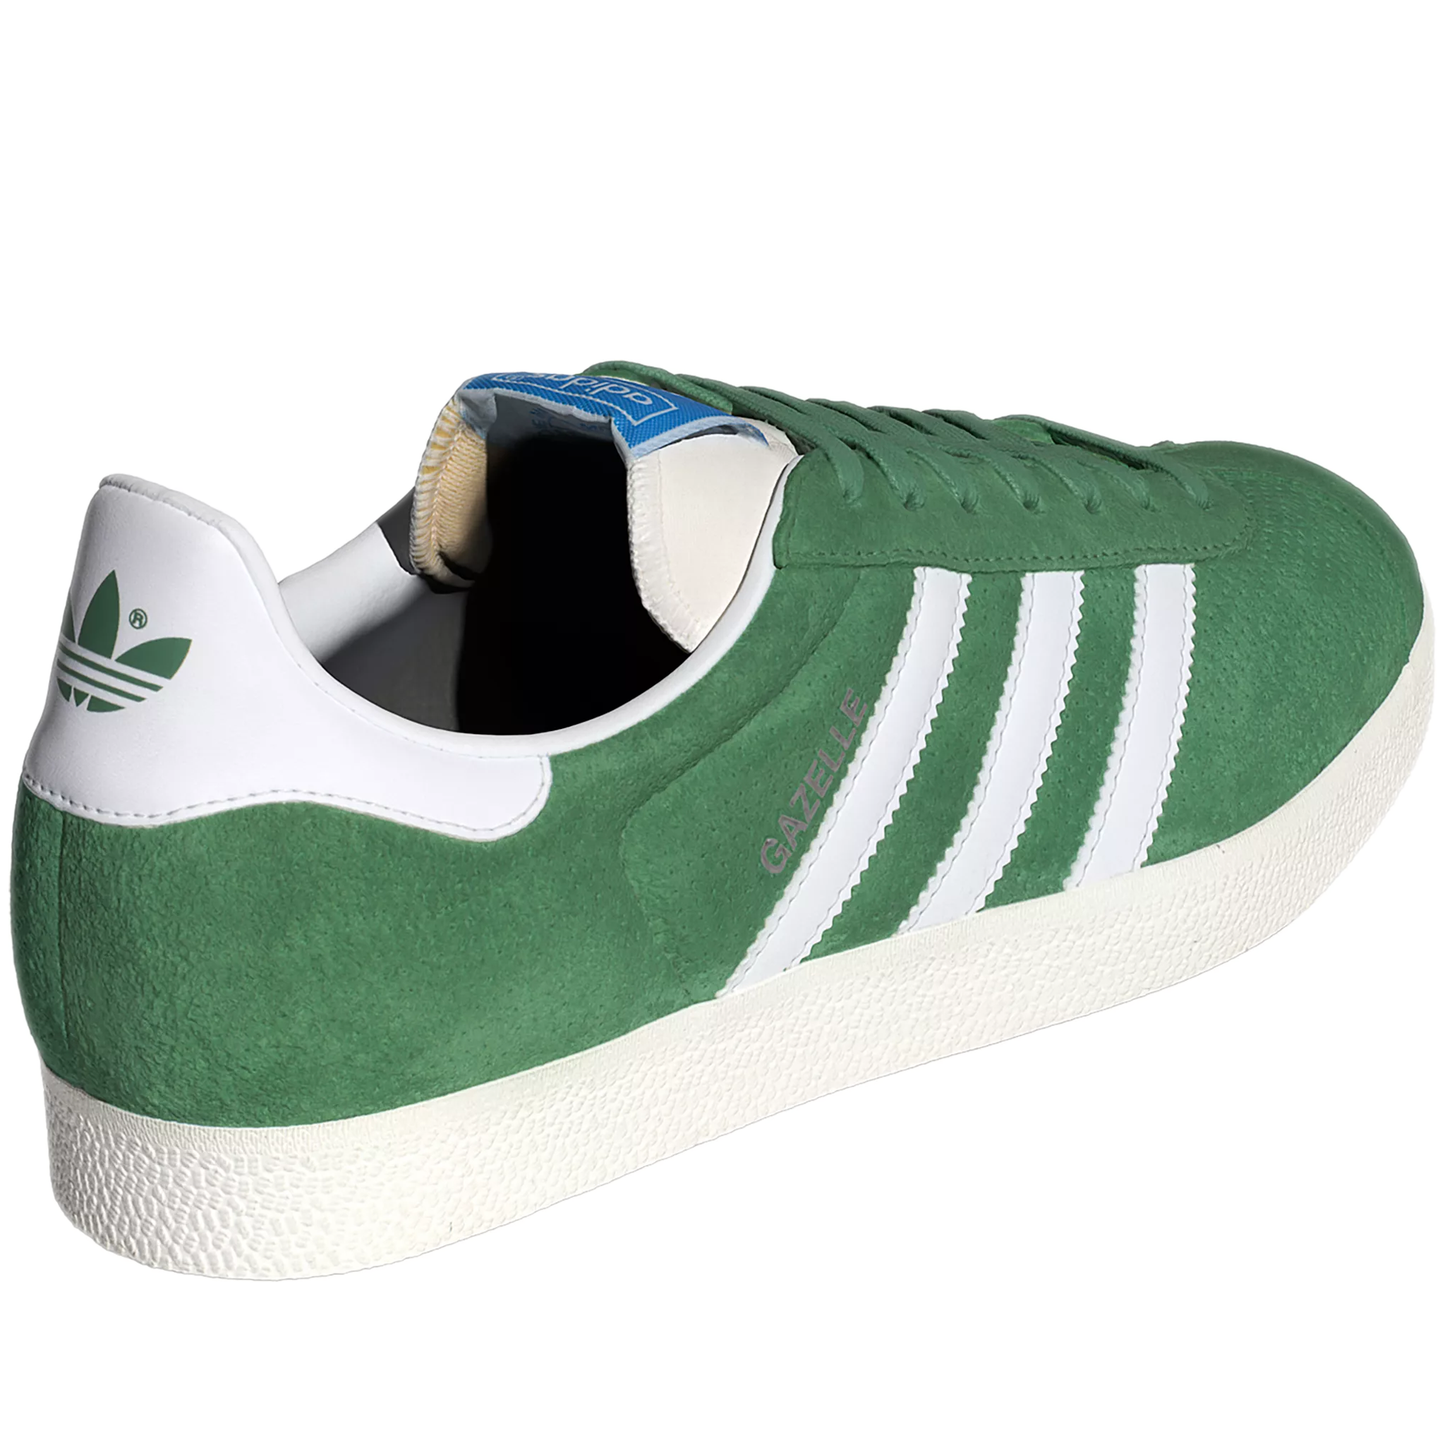 Men's Adidas Gazelle Shoes - Green/ white